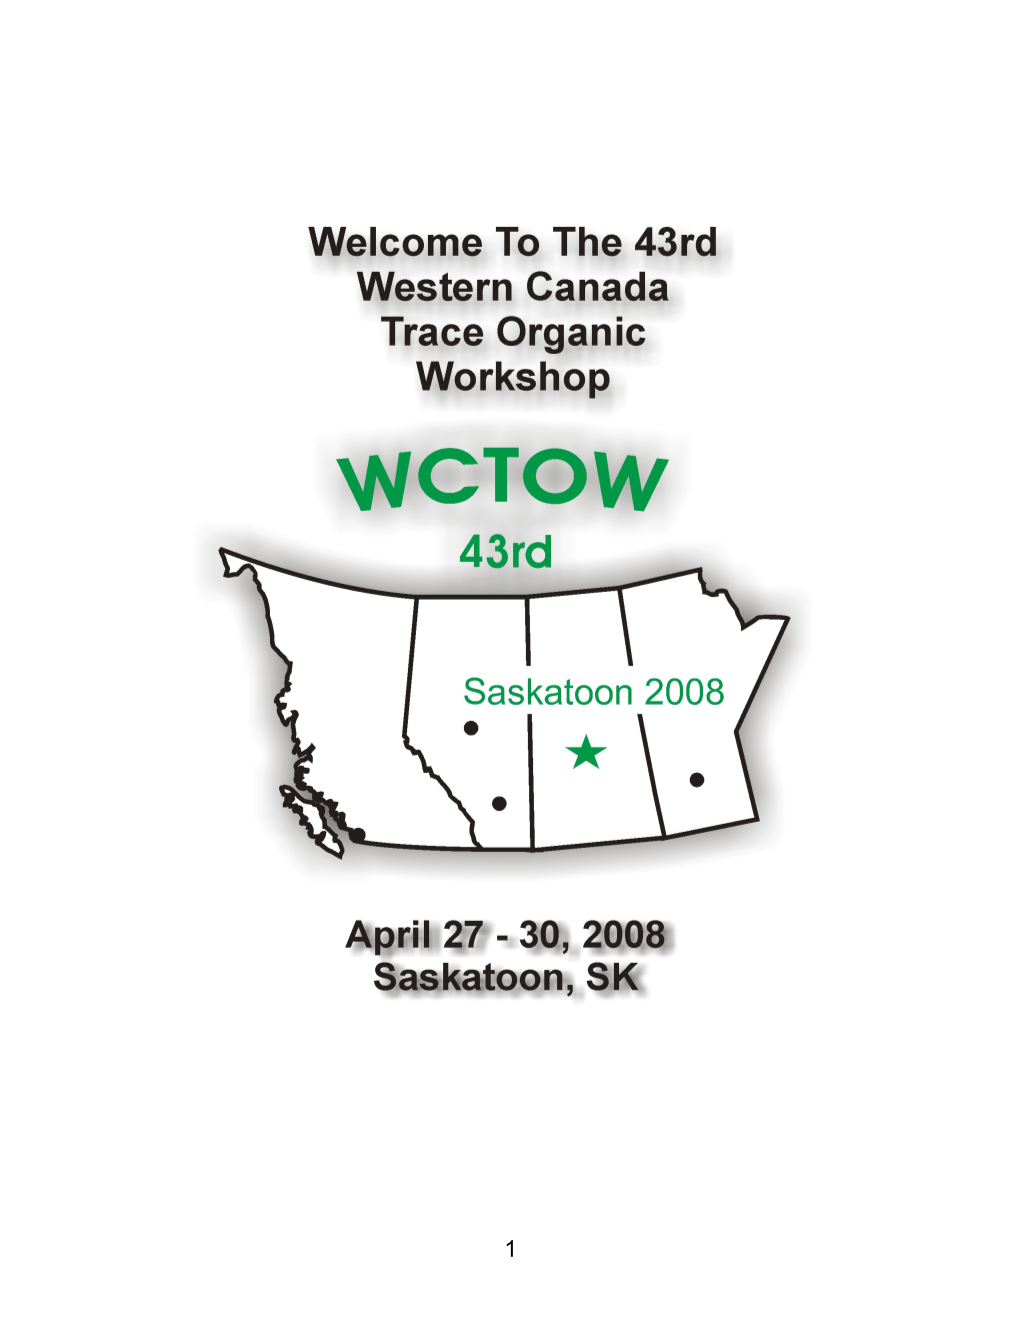 WTCOW 2004, Conference Agenda